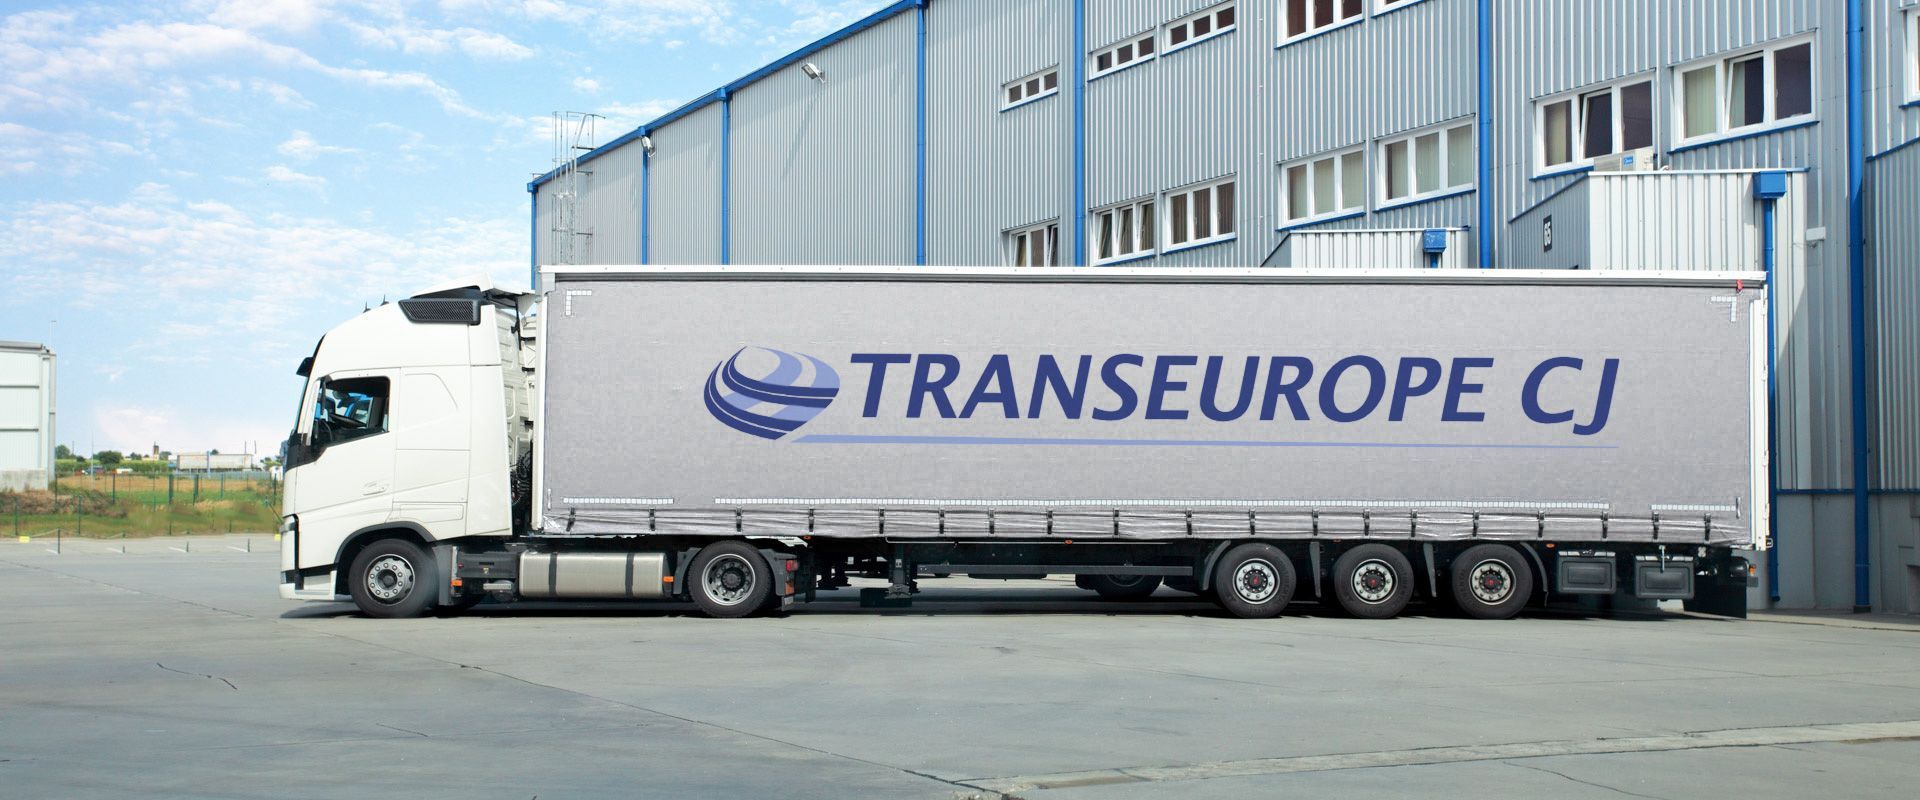 transeurope cj transport marchandise europe france camion entrepot palette